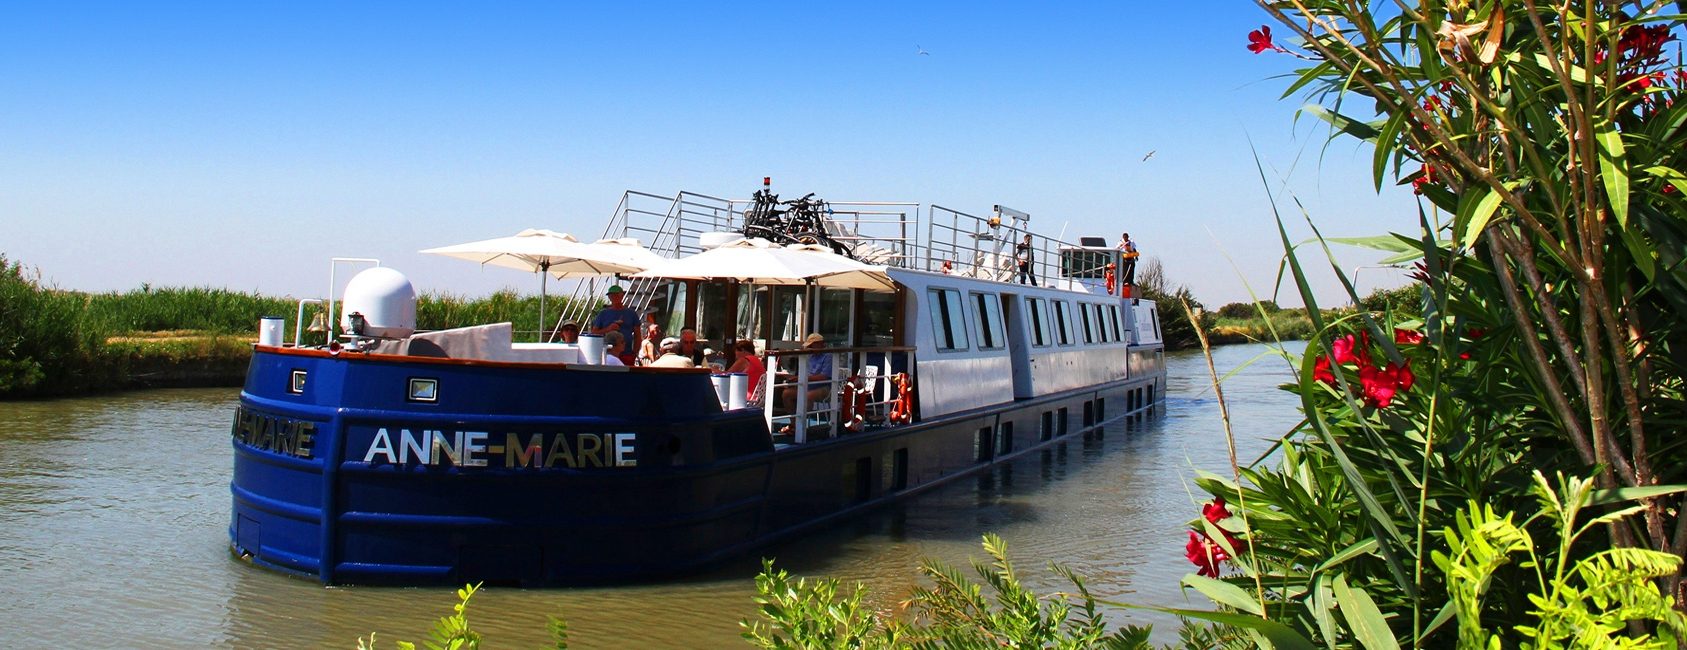 Croisieurope Anne Marie River Cruise Ship Global River Cruising